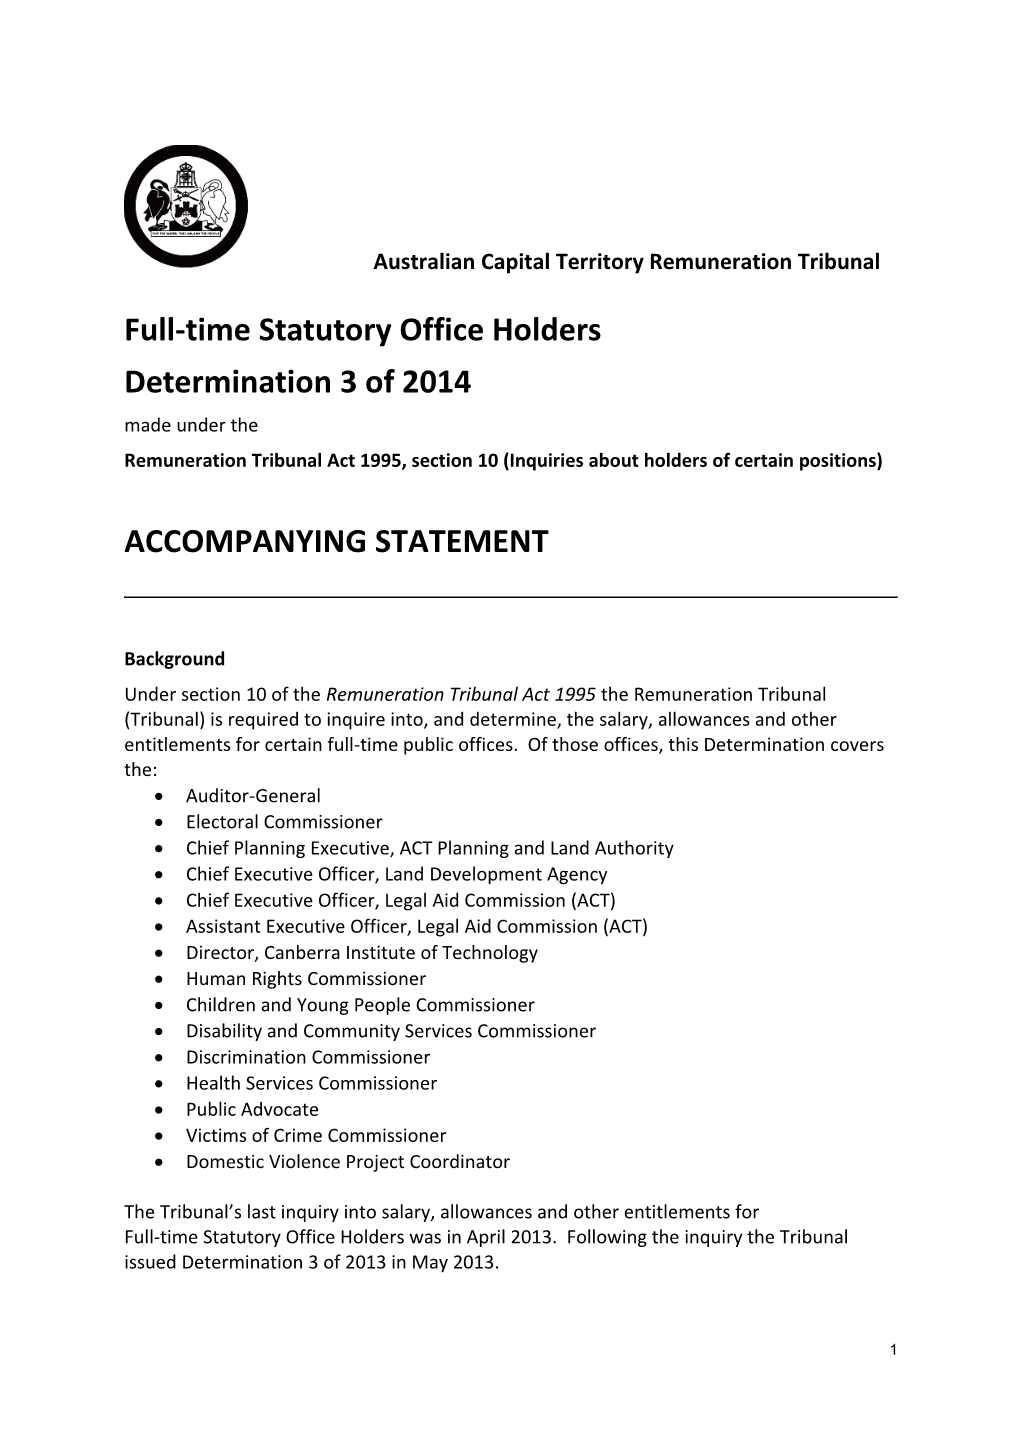 Determination 3 of 2013 - Full-Time Statutory Office Holders